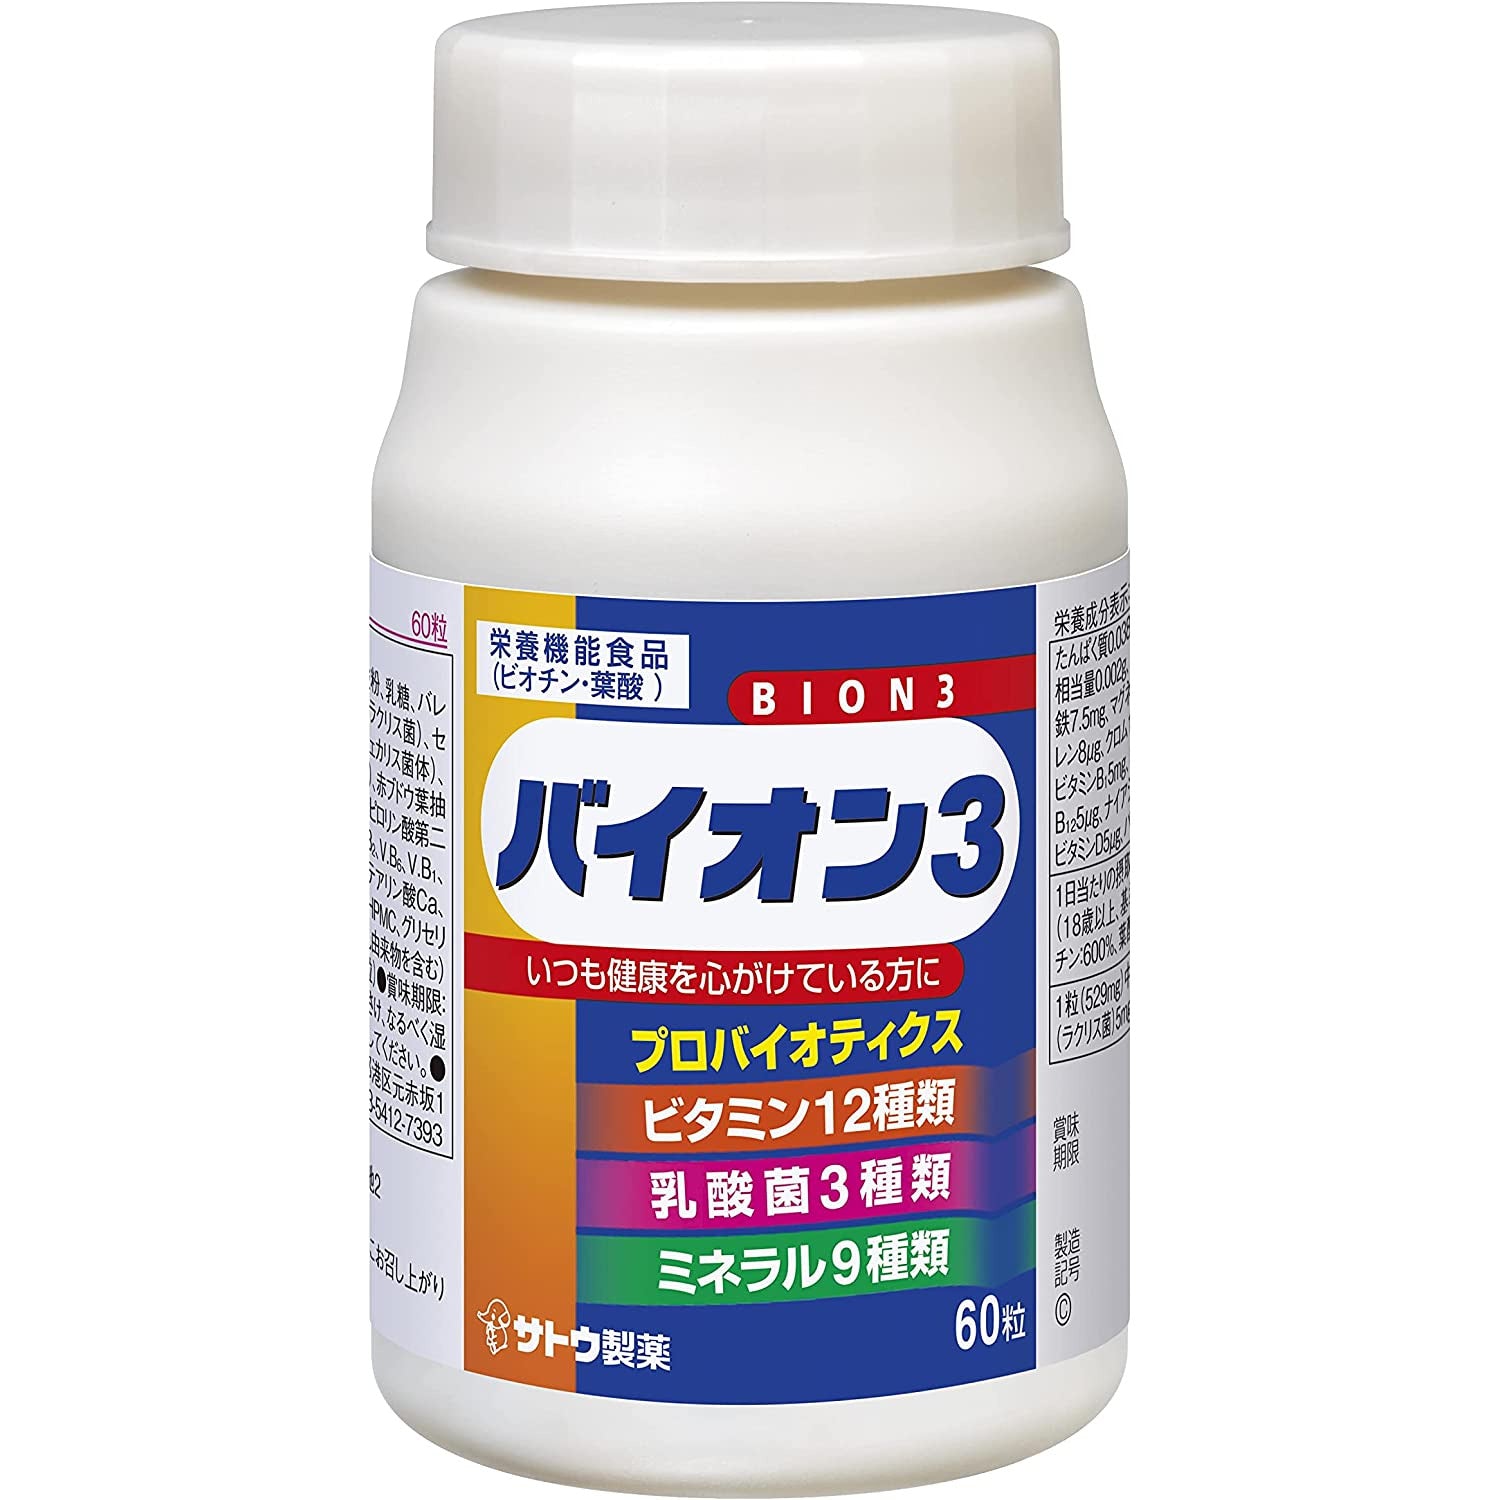 Sato Pharmaceutical Bioon 3 probiotics lactic acid bacteria 30/60 tablets